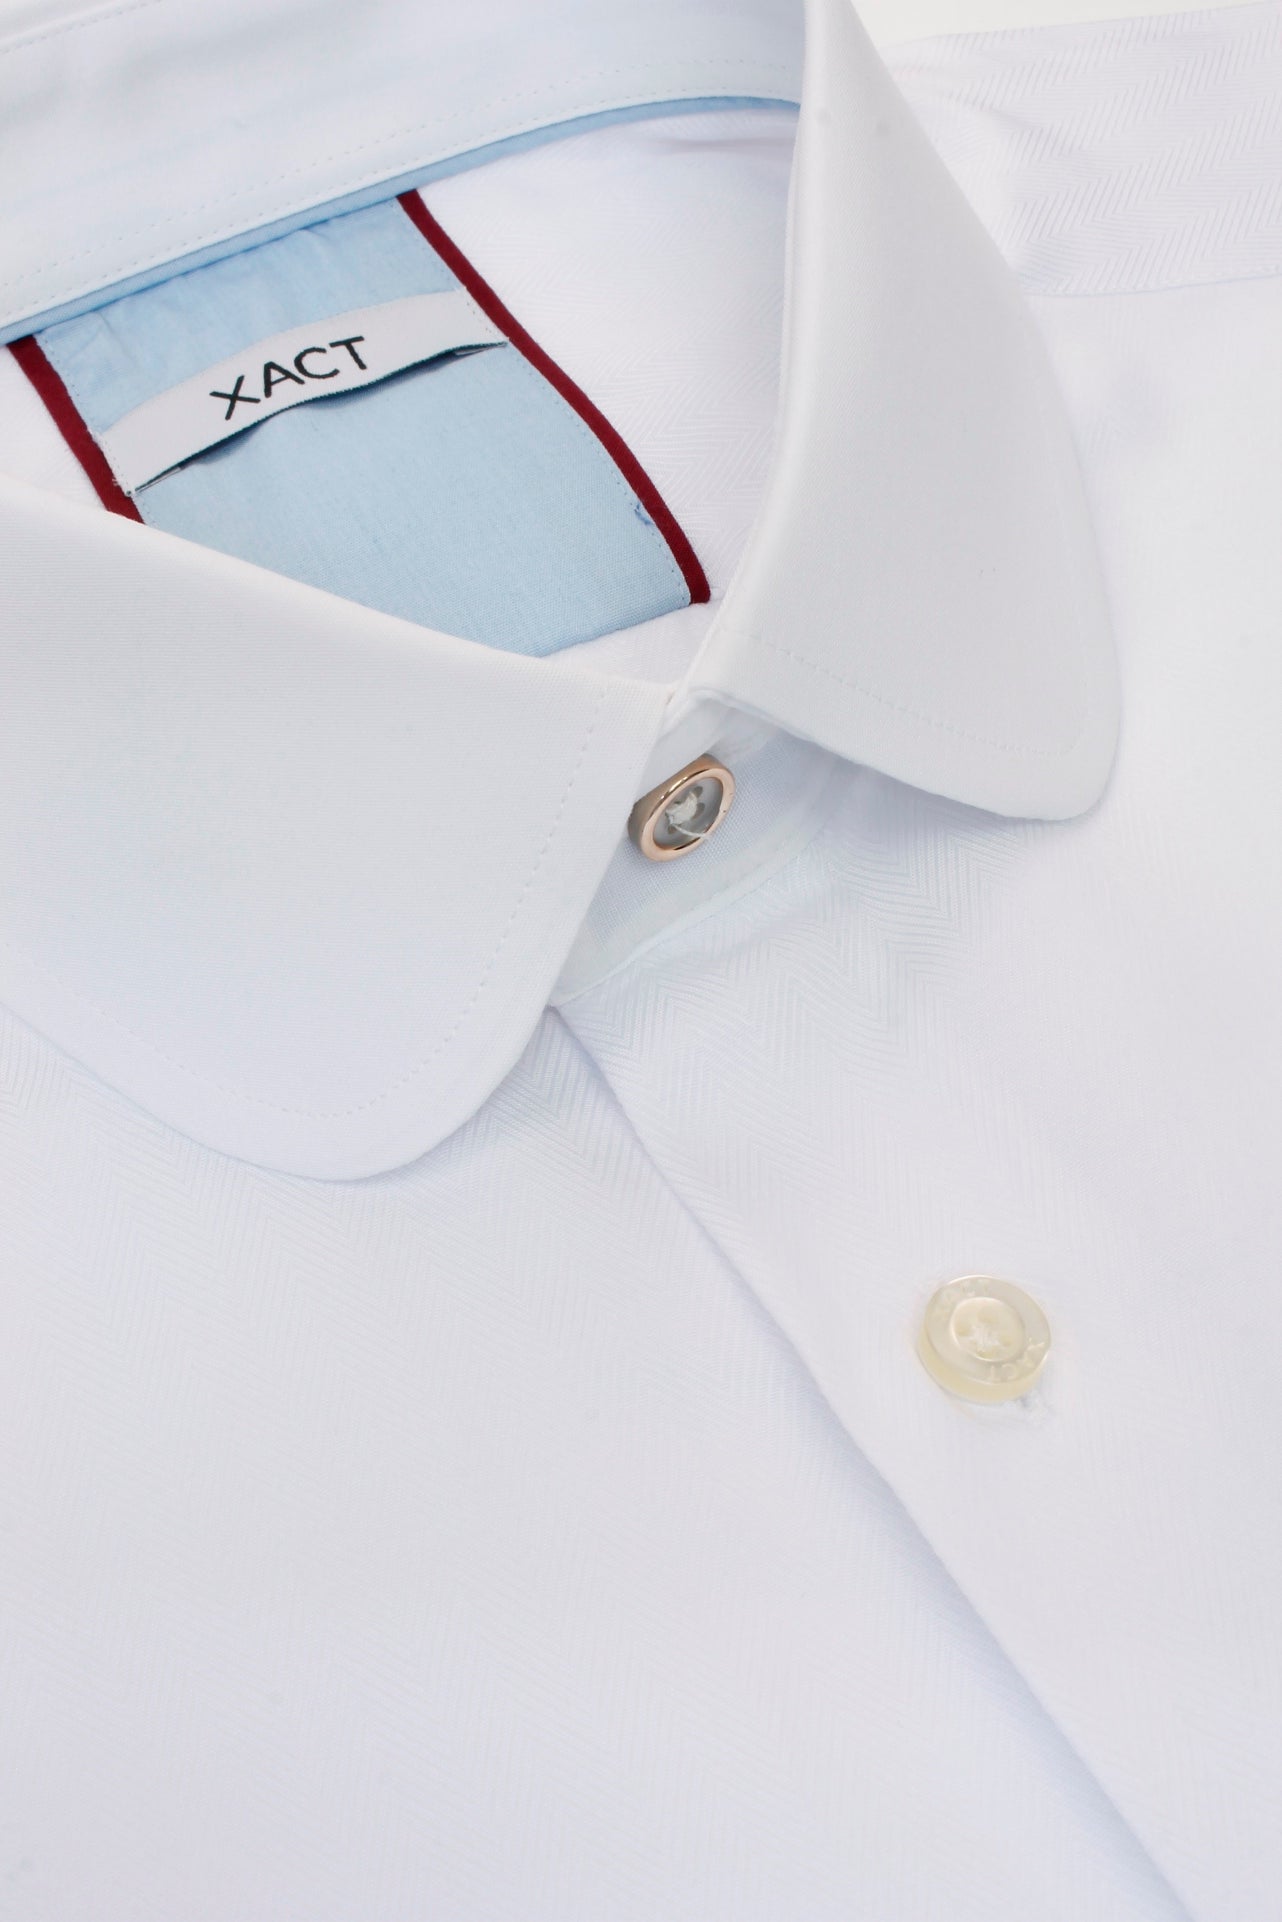 Xact Men's Club/ Penny Collar Shirt - White Contrast Collar & Cuffs-4